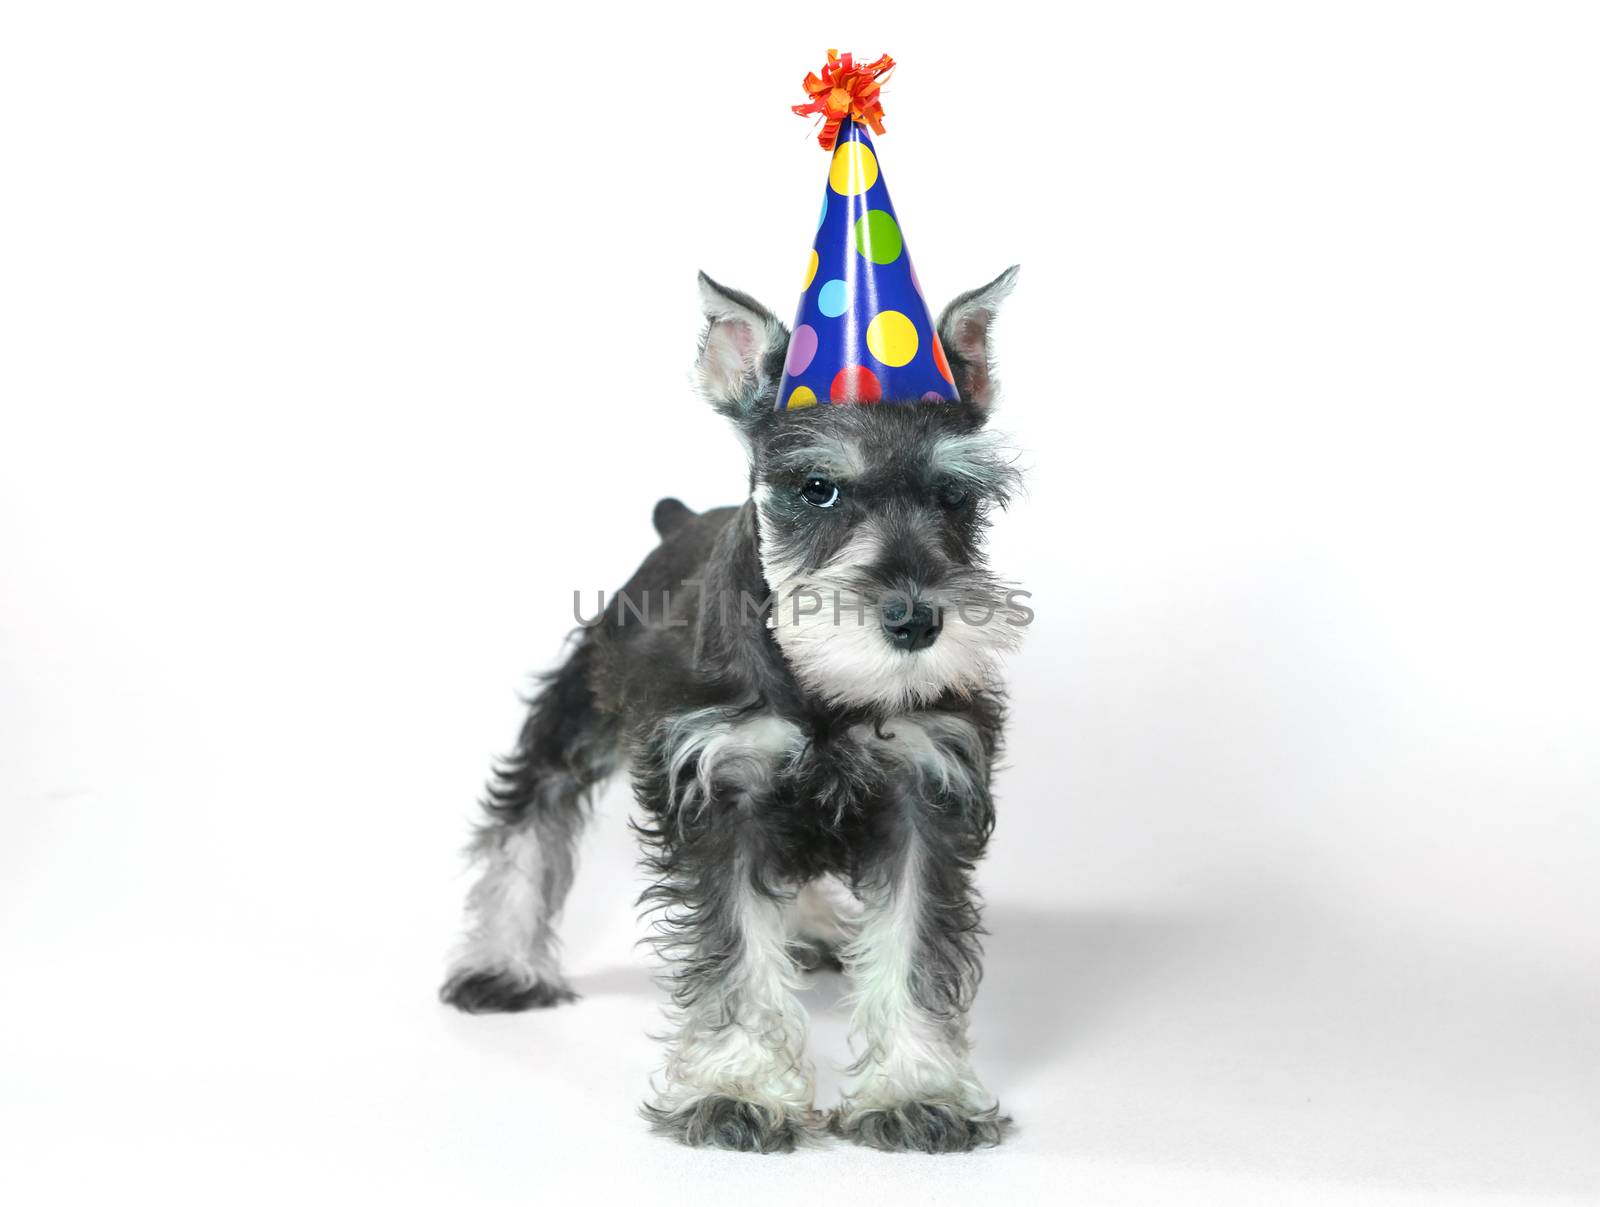 Birthday Hat Wearing Miniature Schnauzer Puppy Dog on White by tobkatrina